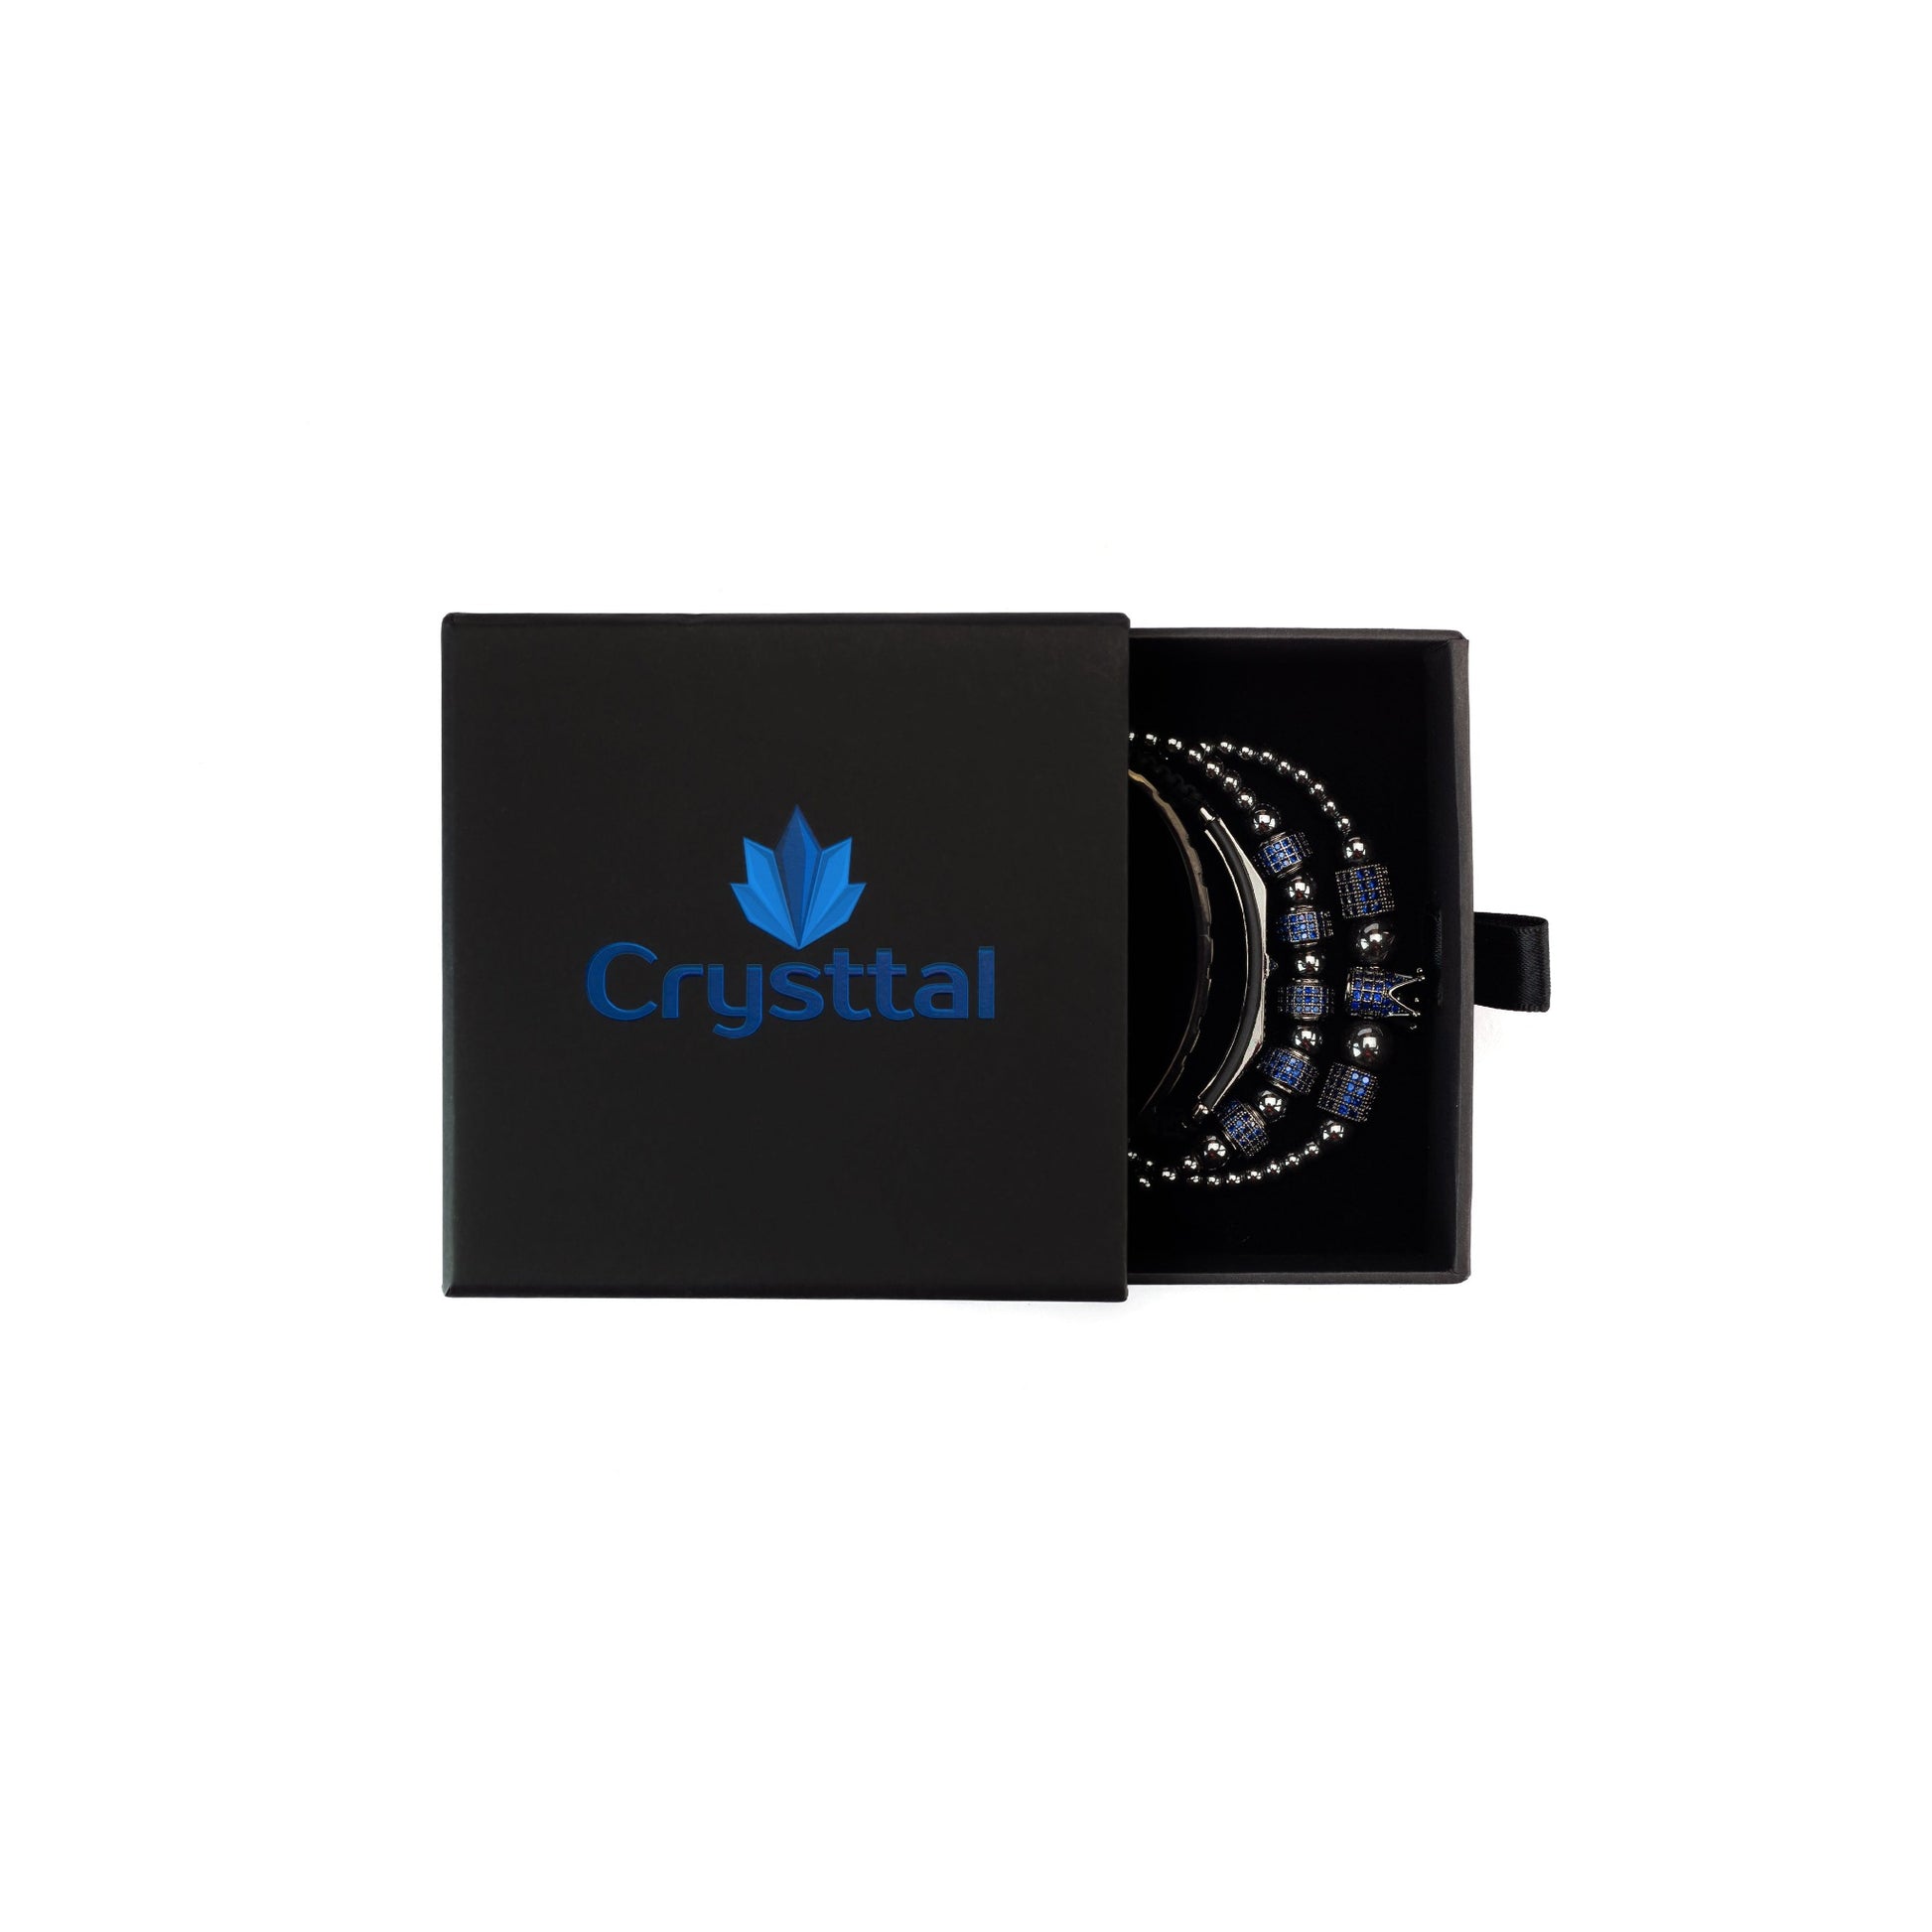 Imperial King Hematite Bracelet Set in Crysttal branded gift box